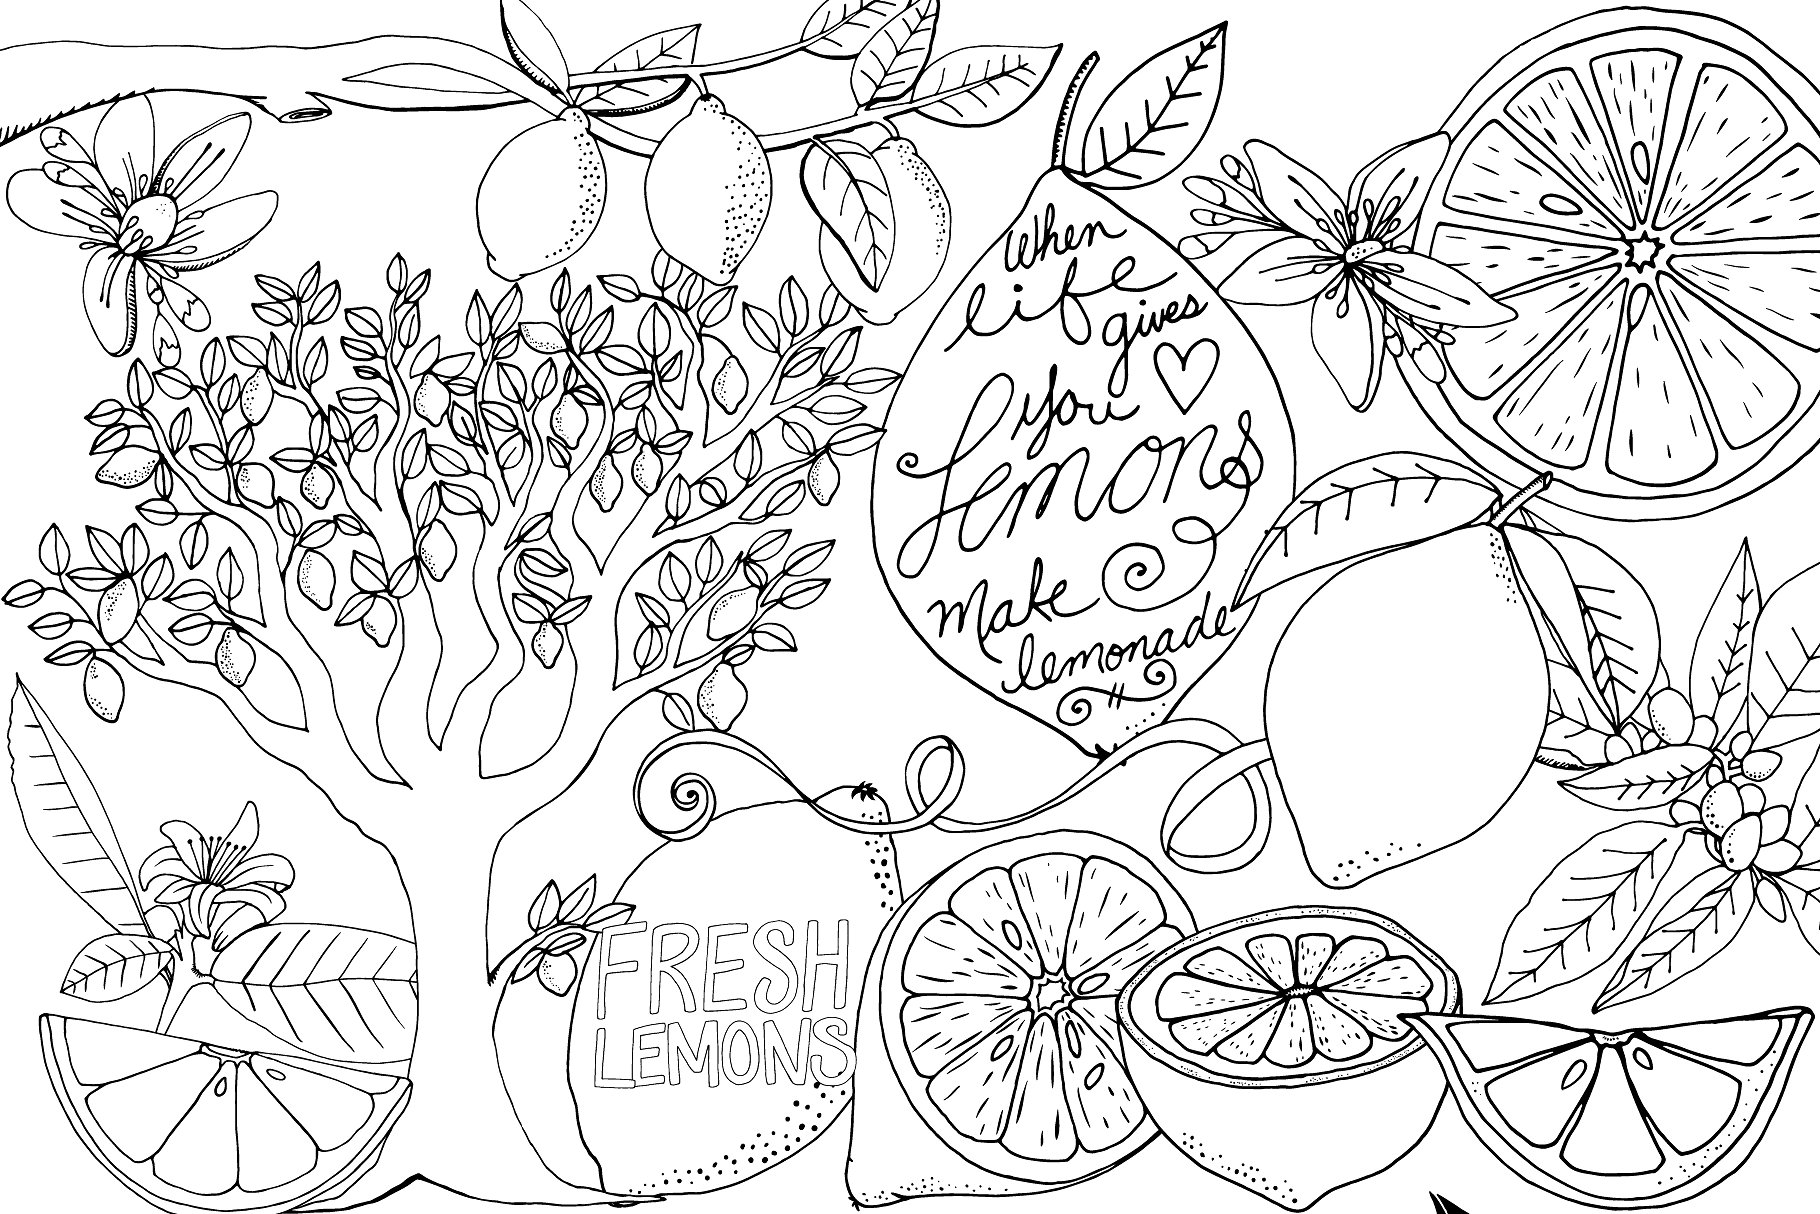 新鲜夏天柠檬插图合集 Lemons, Summer Fruit Illustrations插图(3)